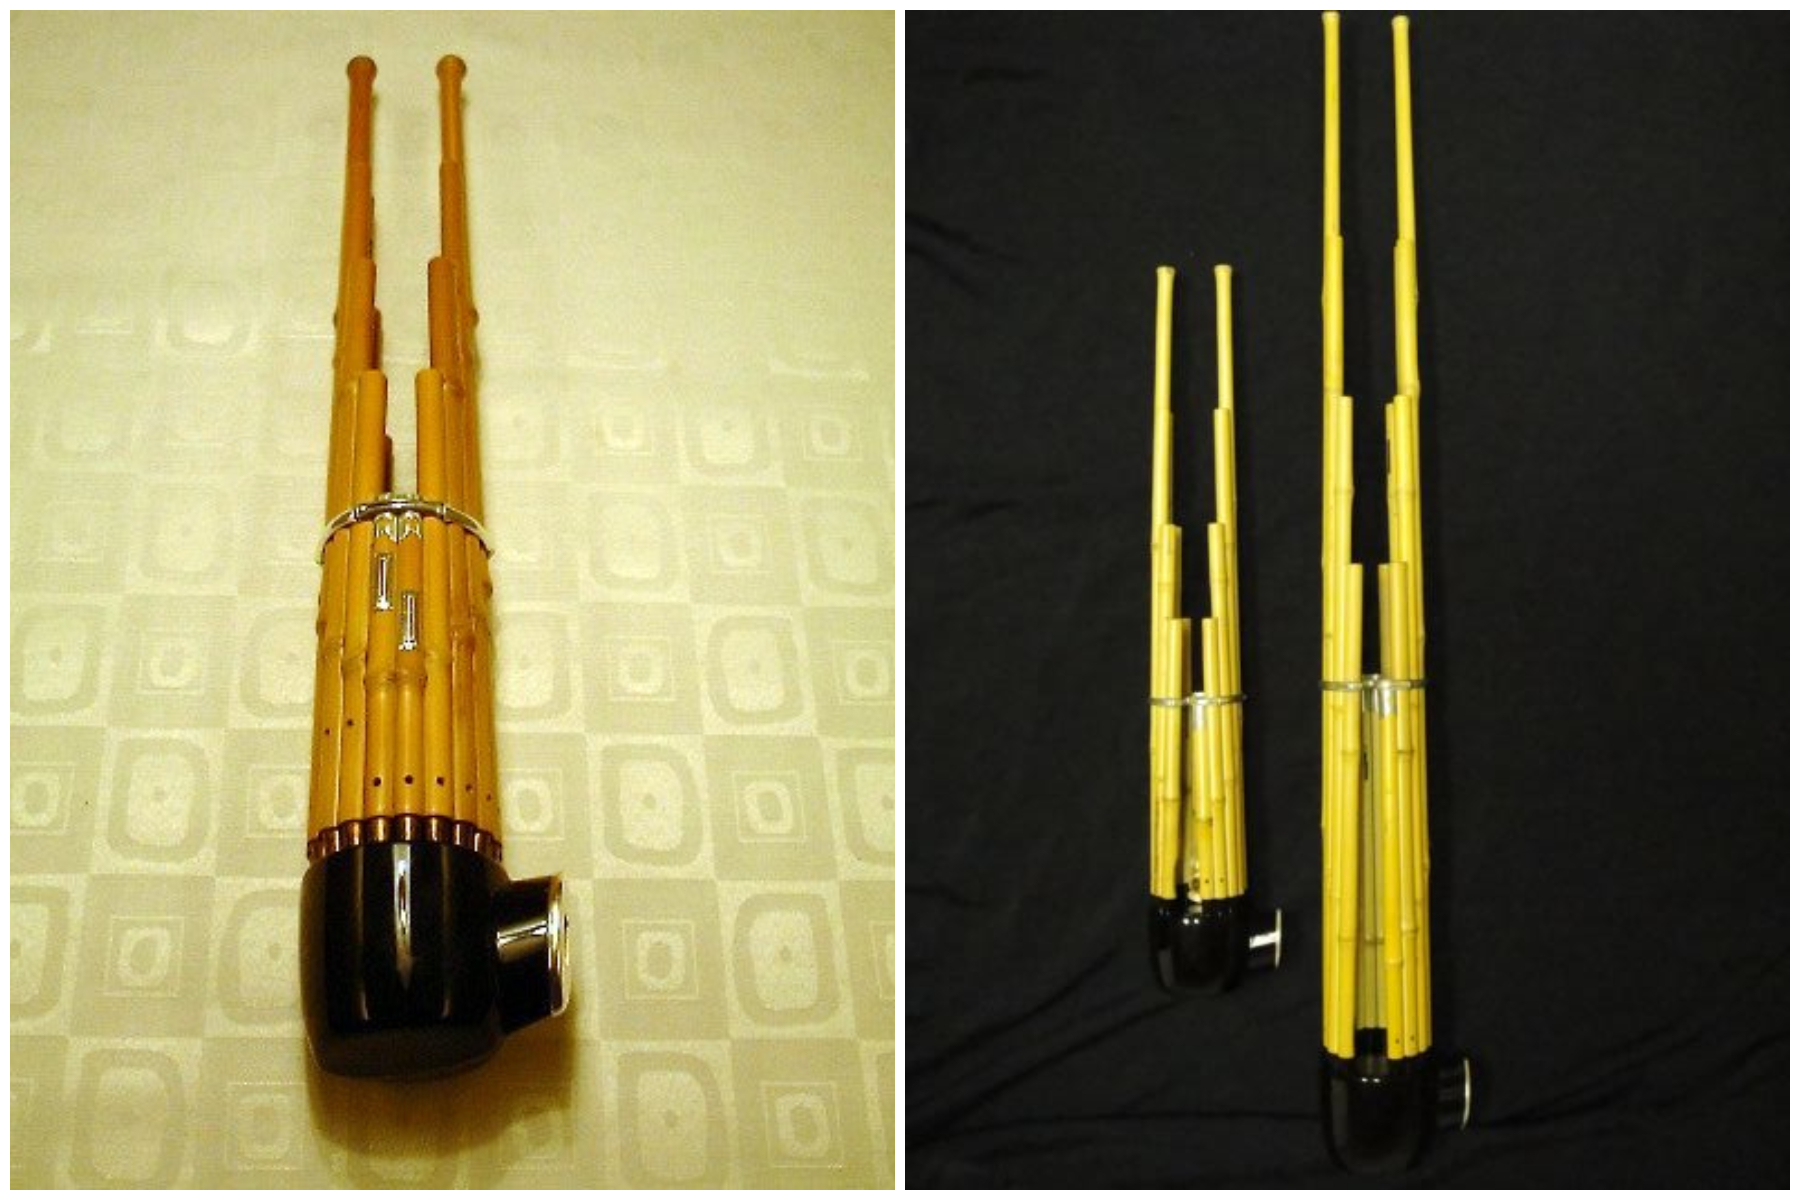 Japanese instruments